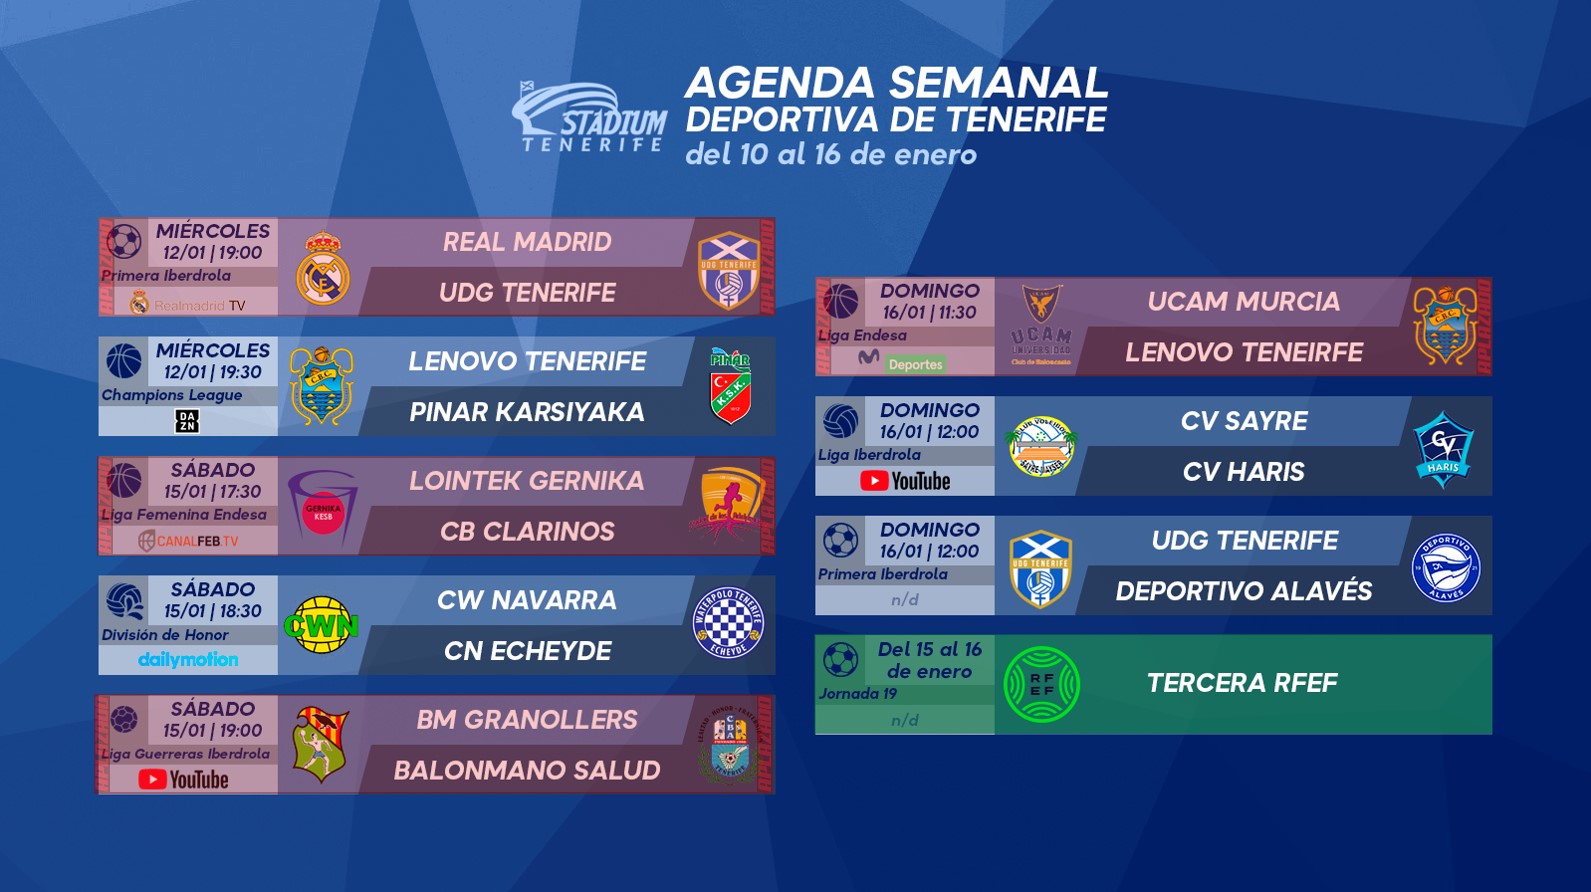 Agenda Semanal Deportiva de Tenerife (10 al 16 de enero)